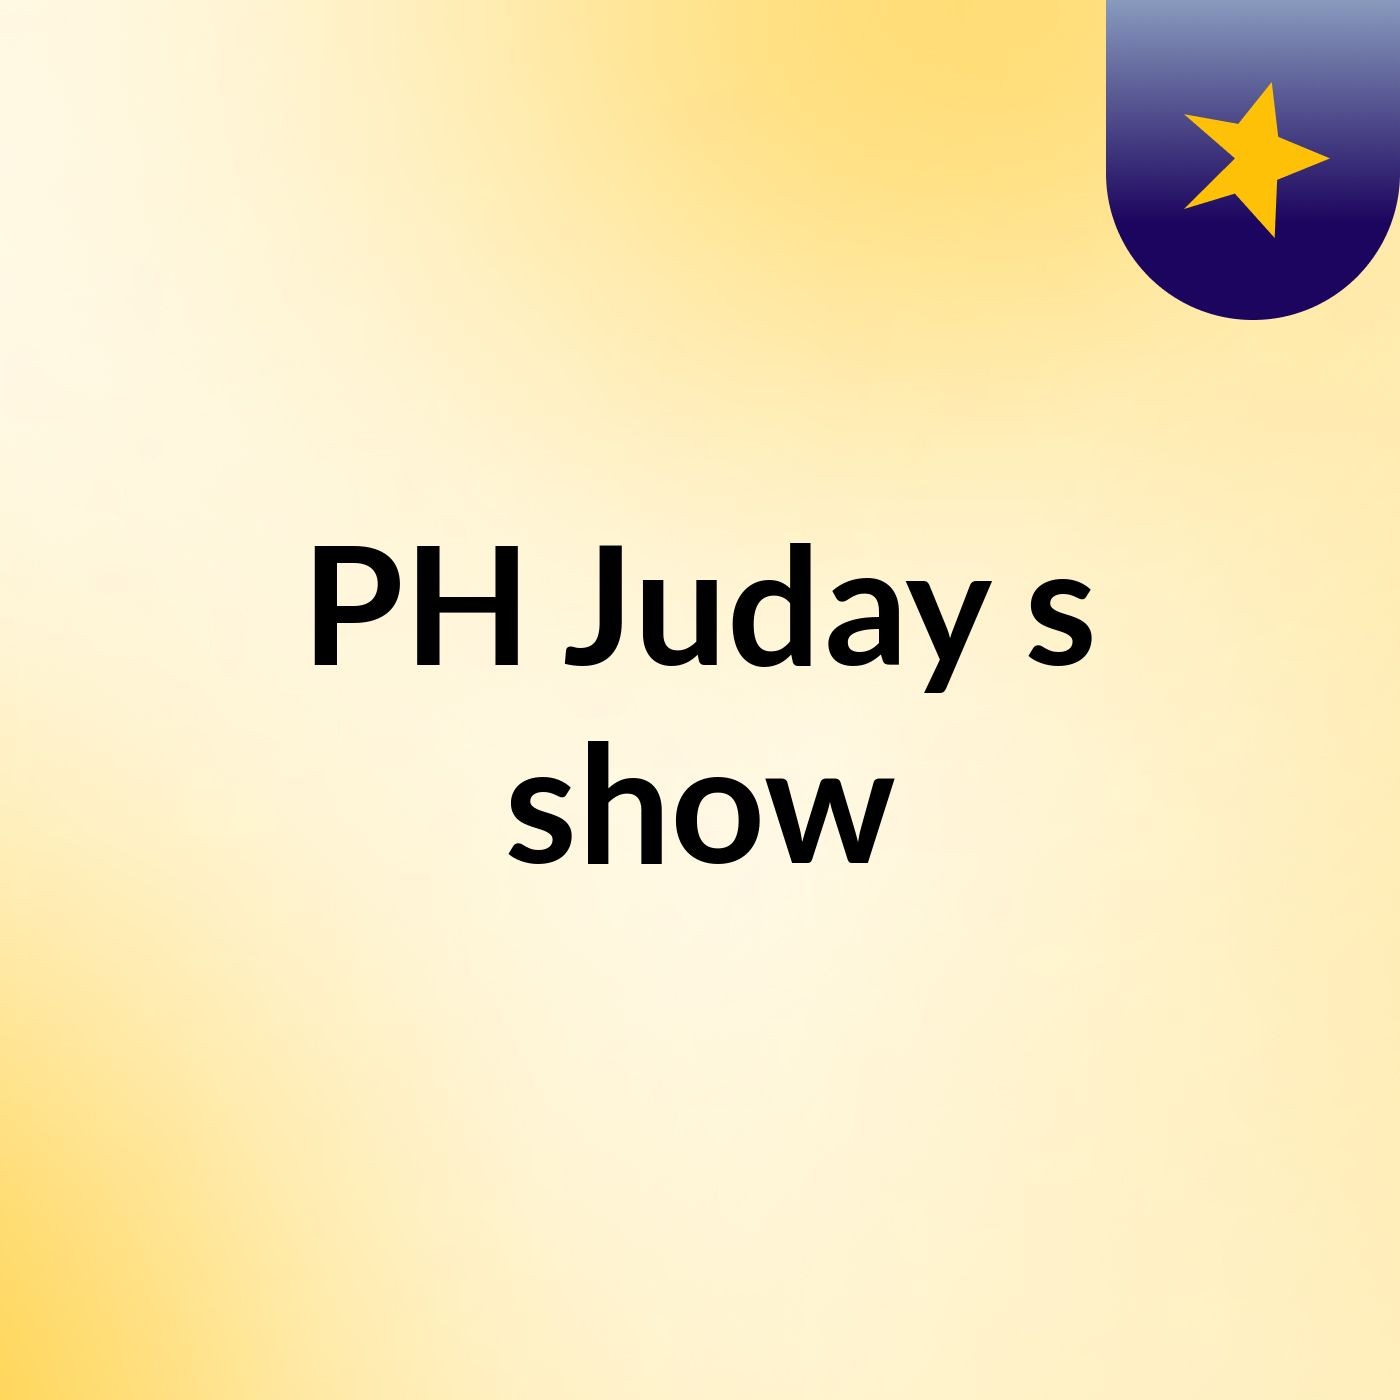 PH Juday's show